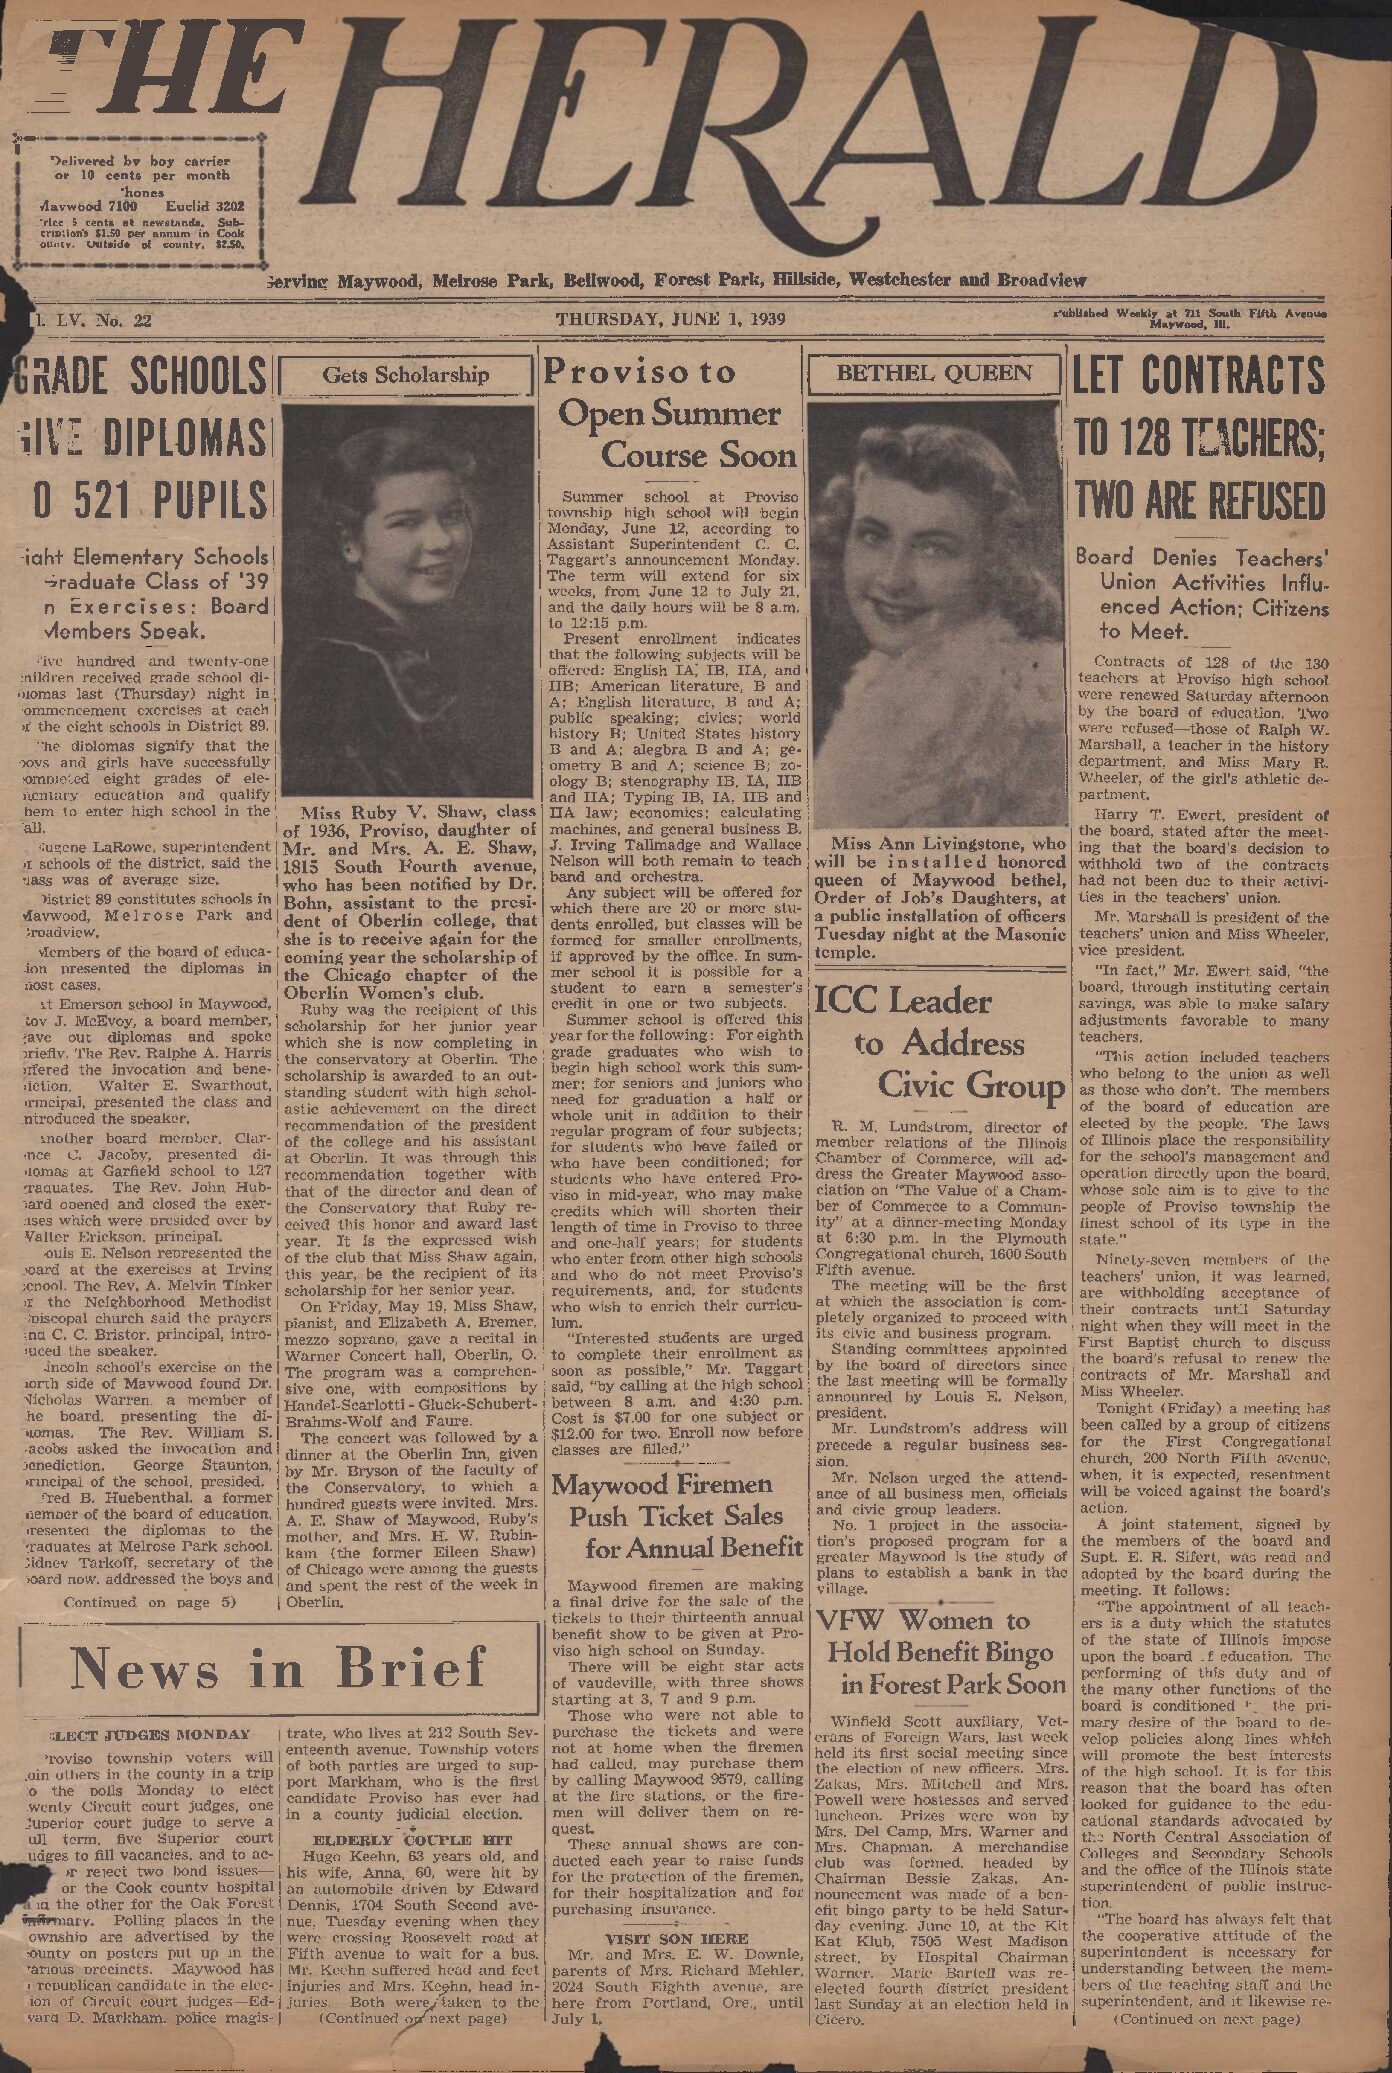 The Herald – 19390601